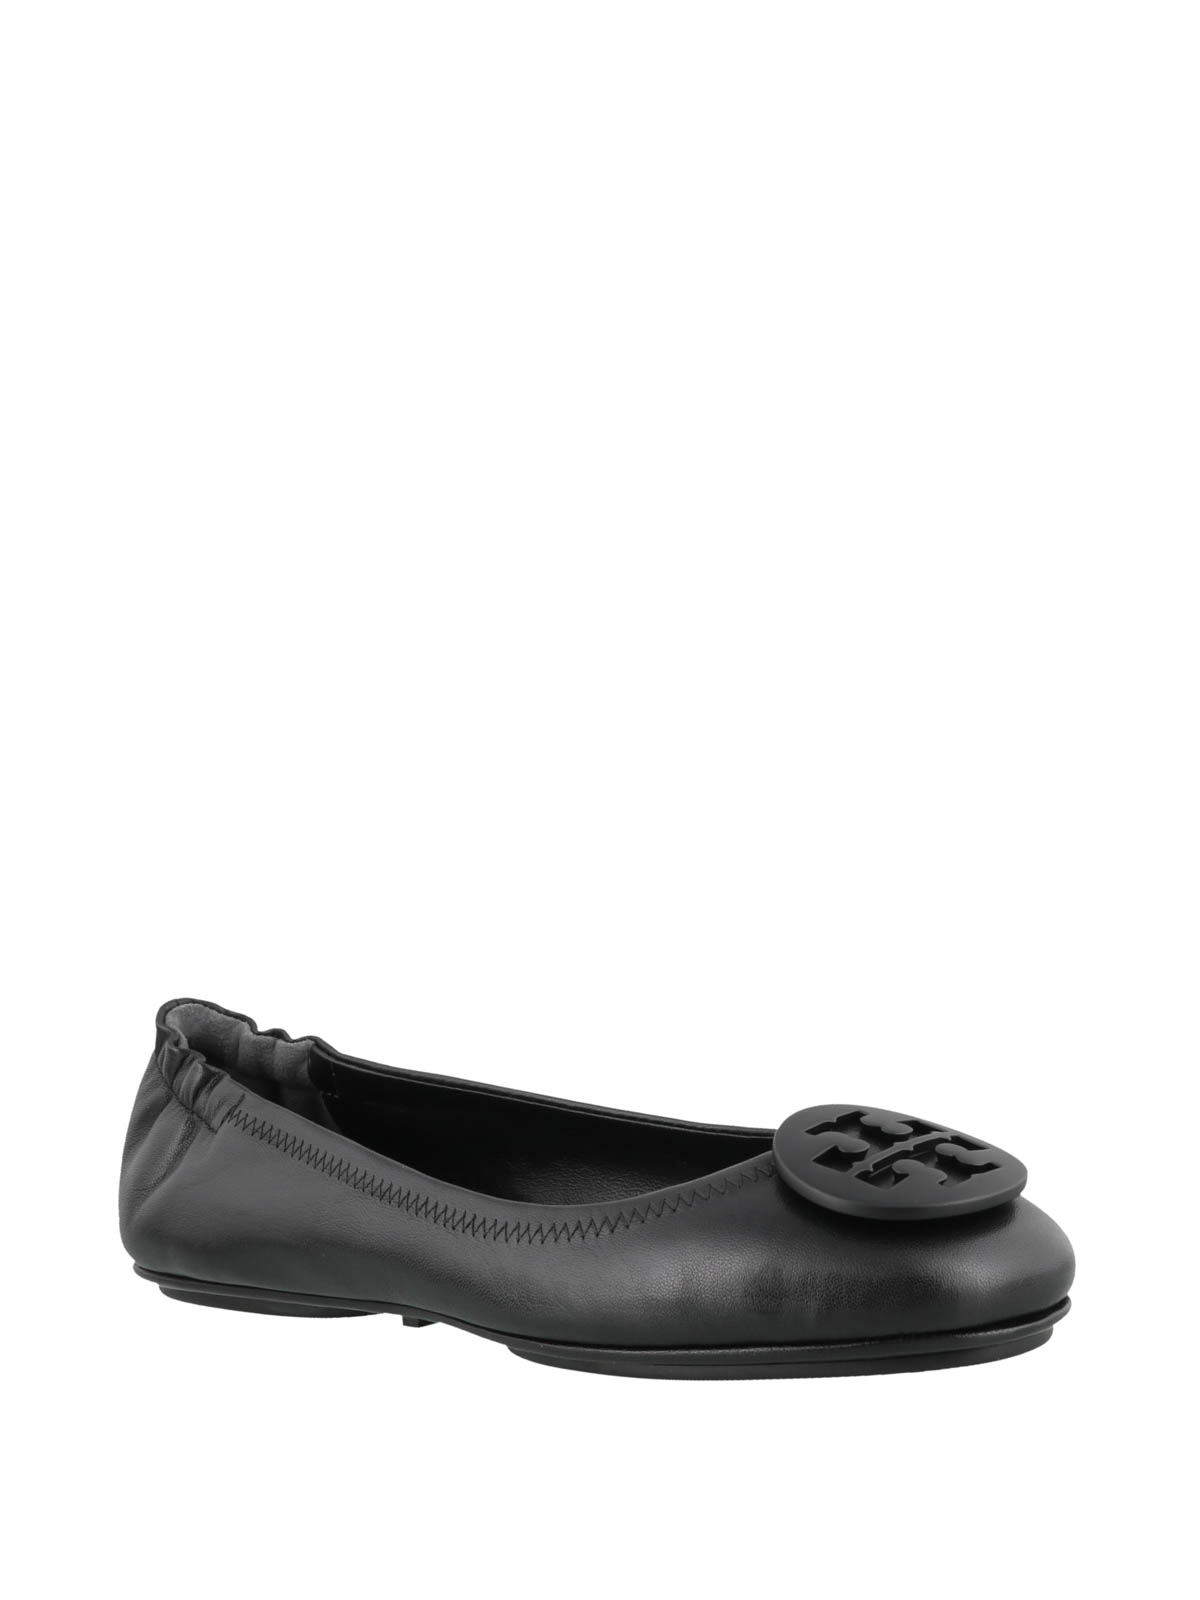 Flat shoes Tory Burch - Minnie packable black nappa flats - 49350006